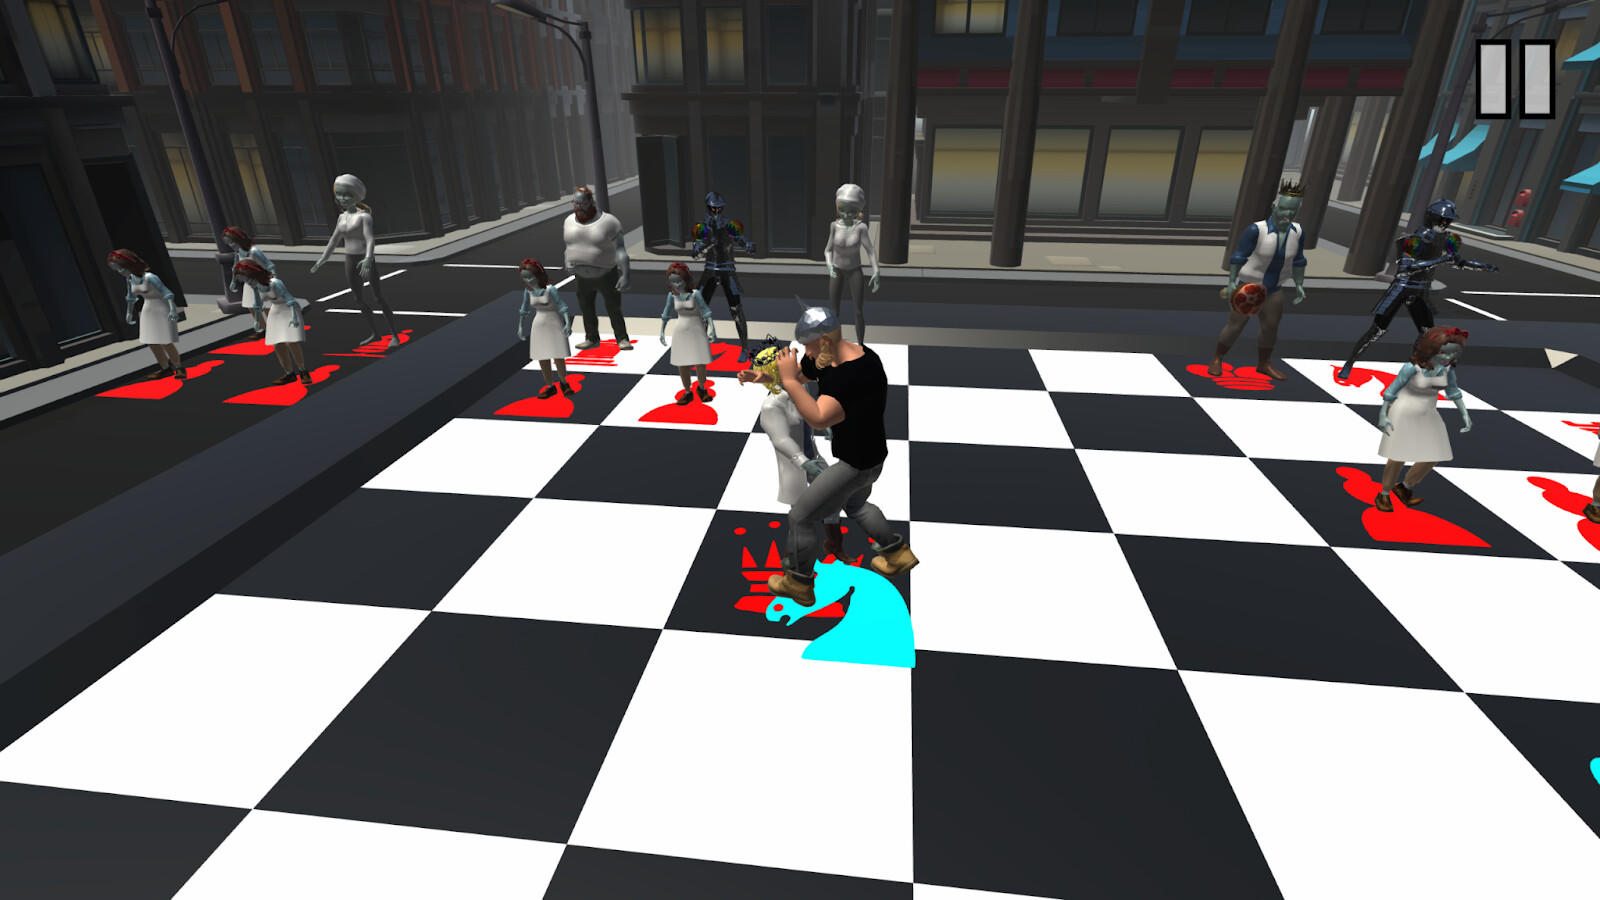 Culture Warz: Chess screenshot game